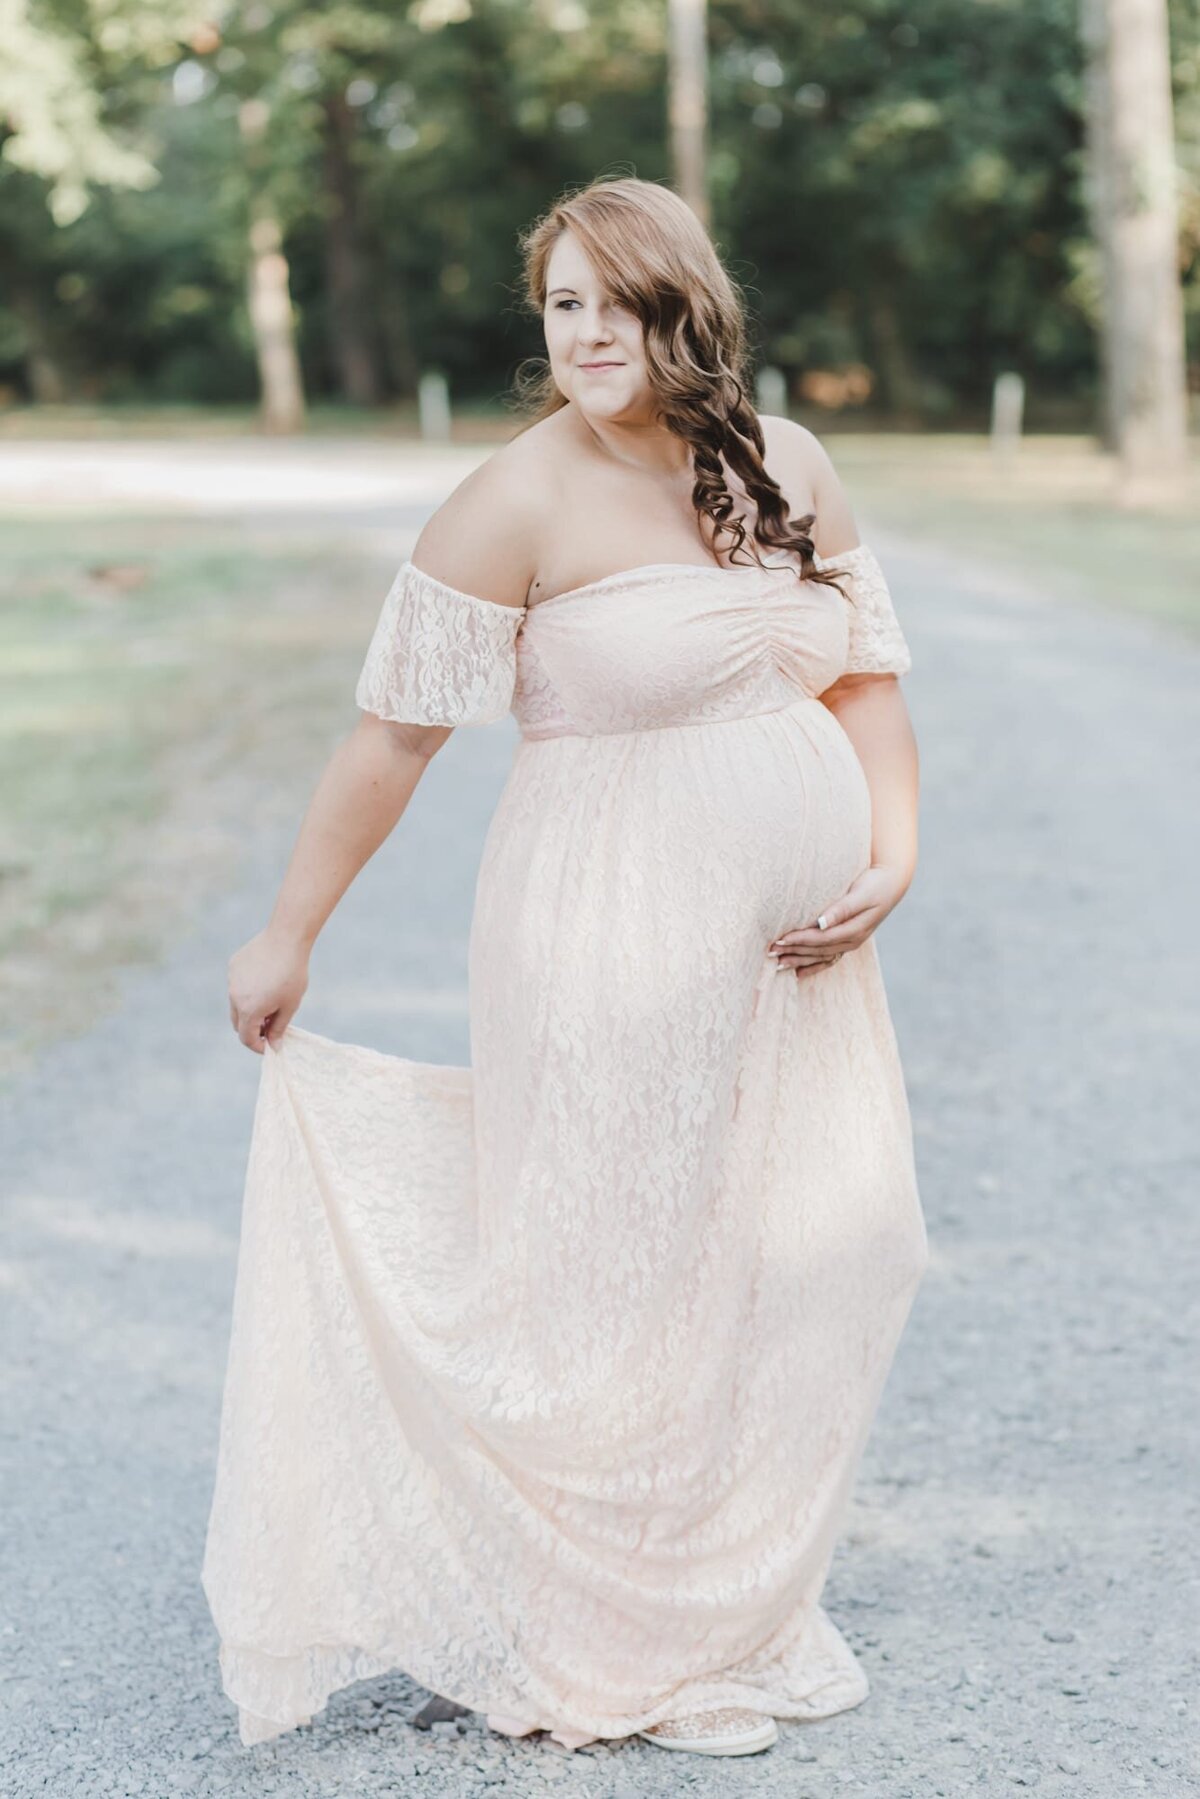 Jenn-Northern-Virginia-Maternity-28